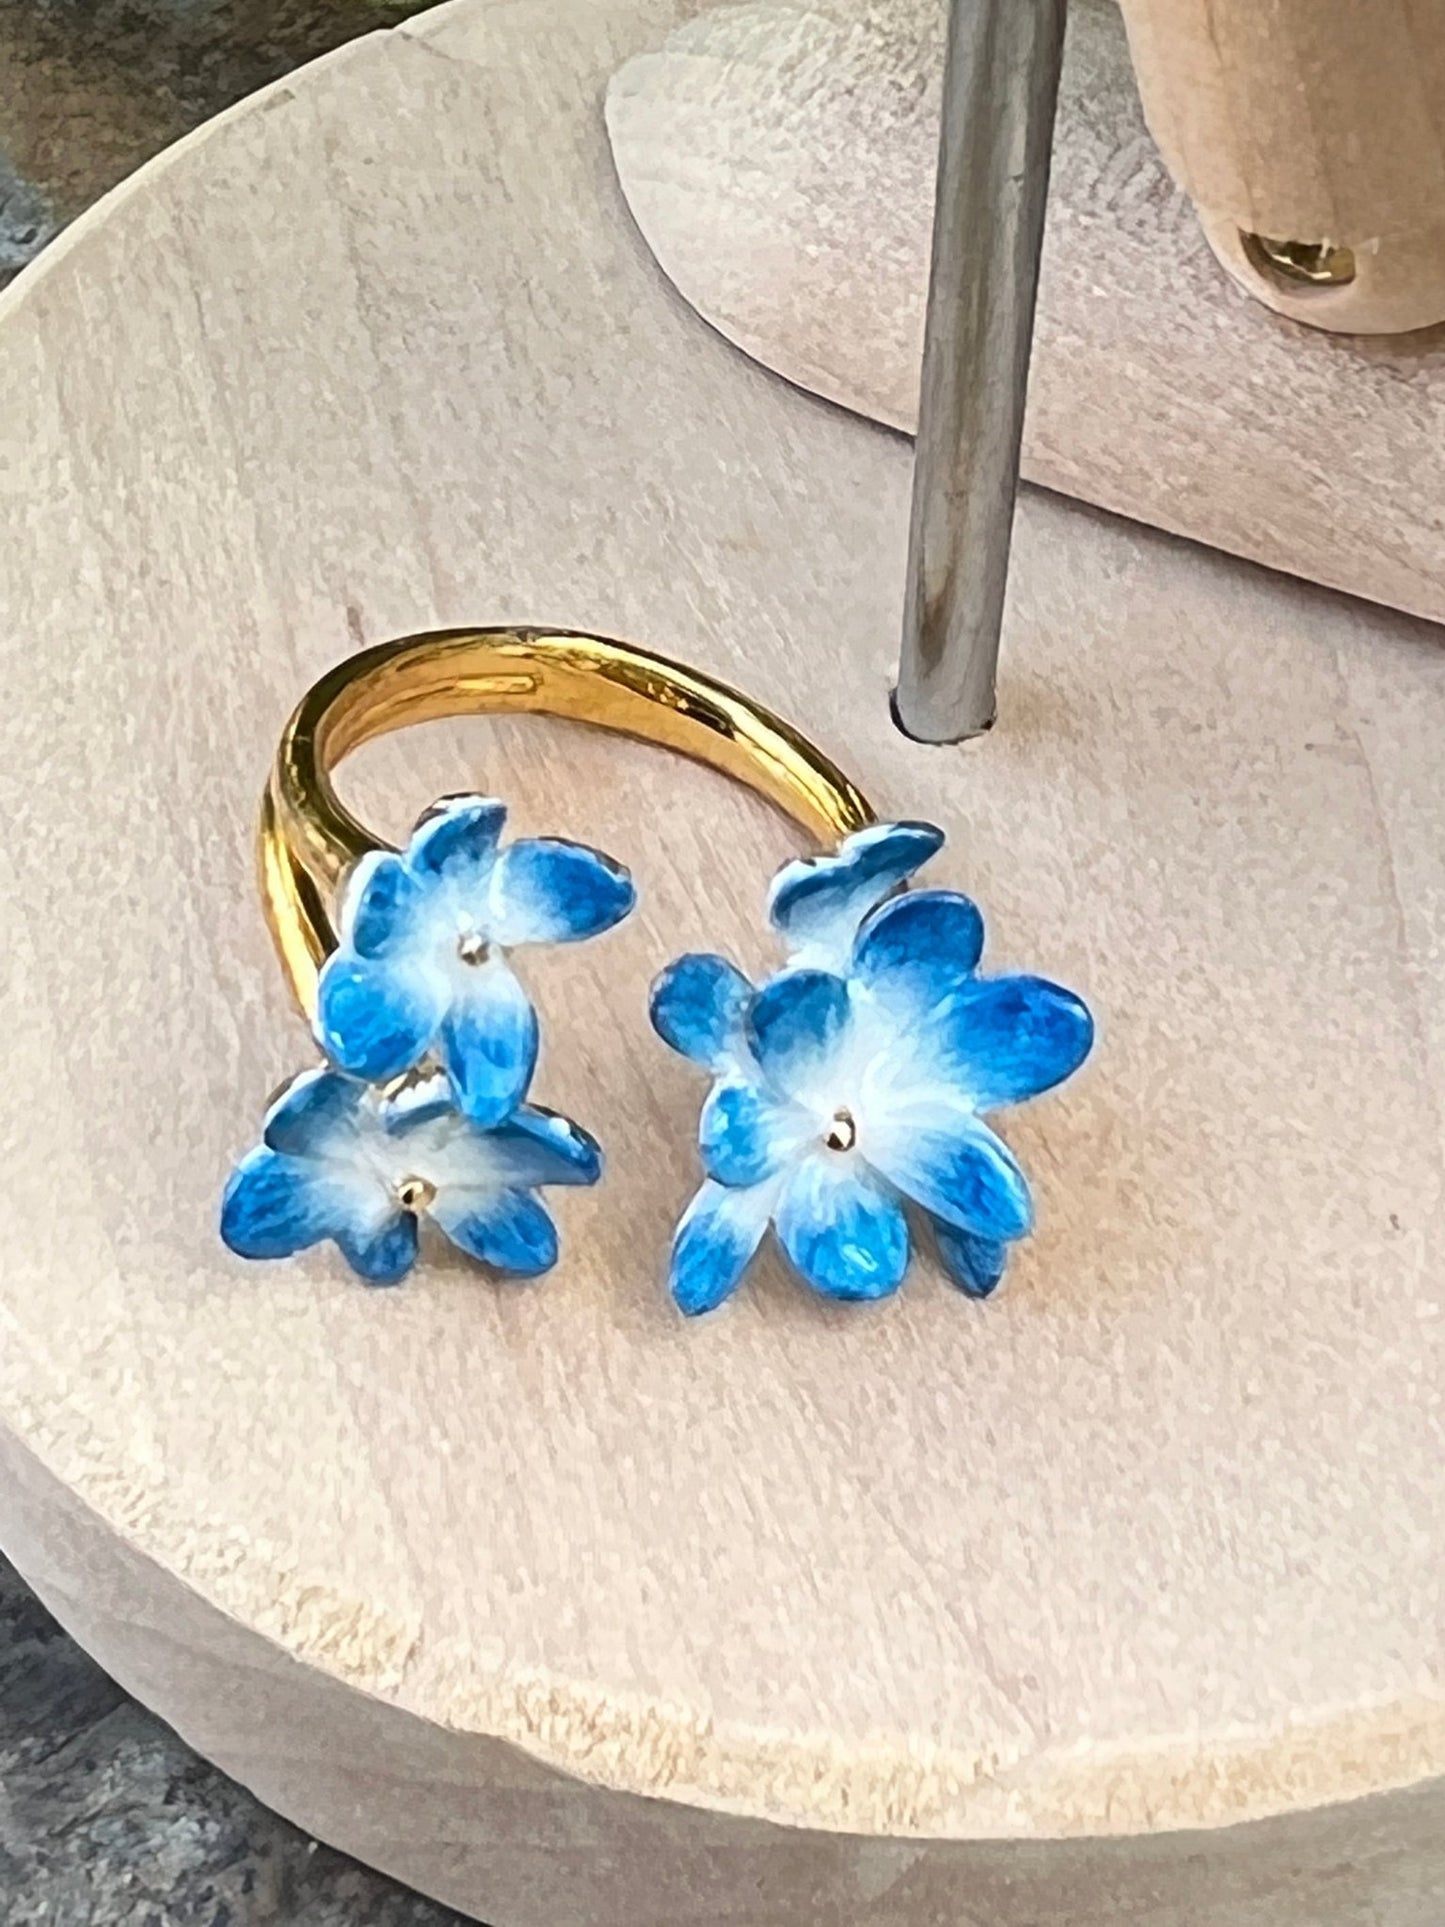 Lovely blue floral statement ringSundara Joon